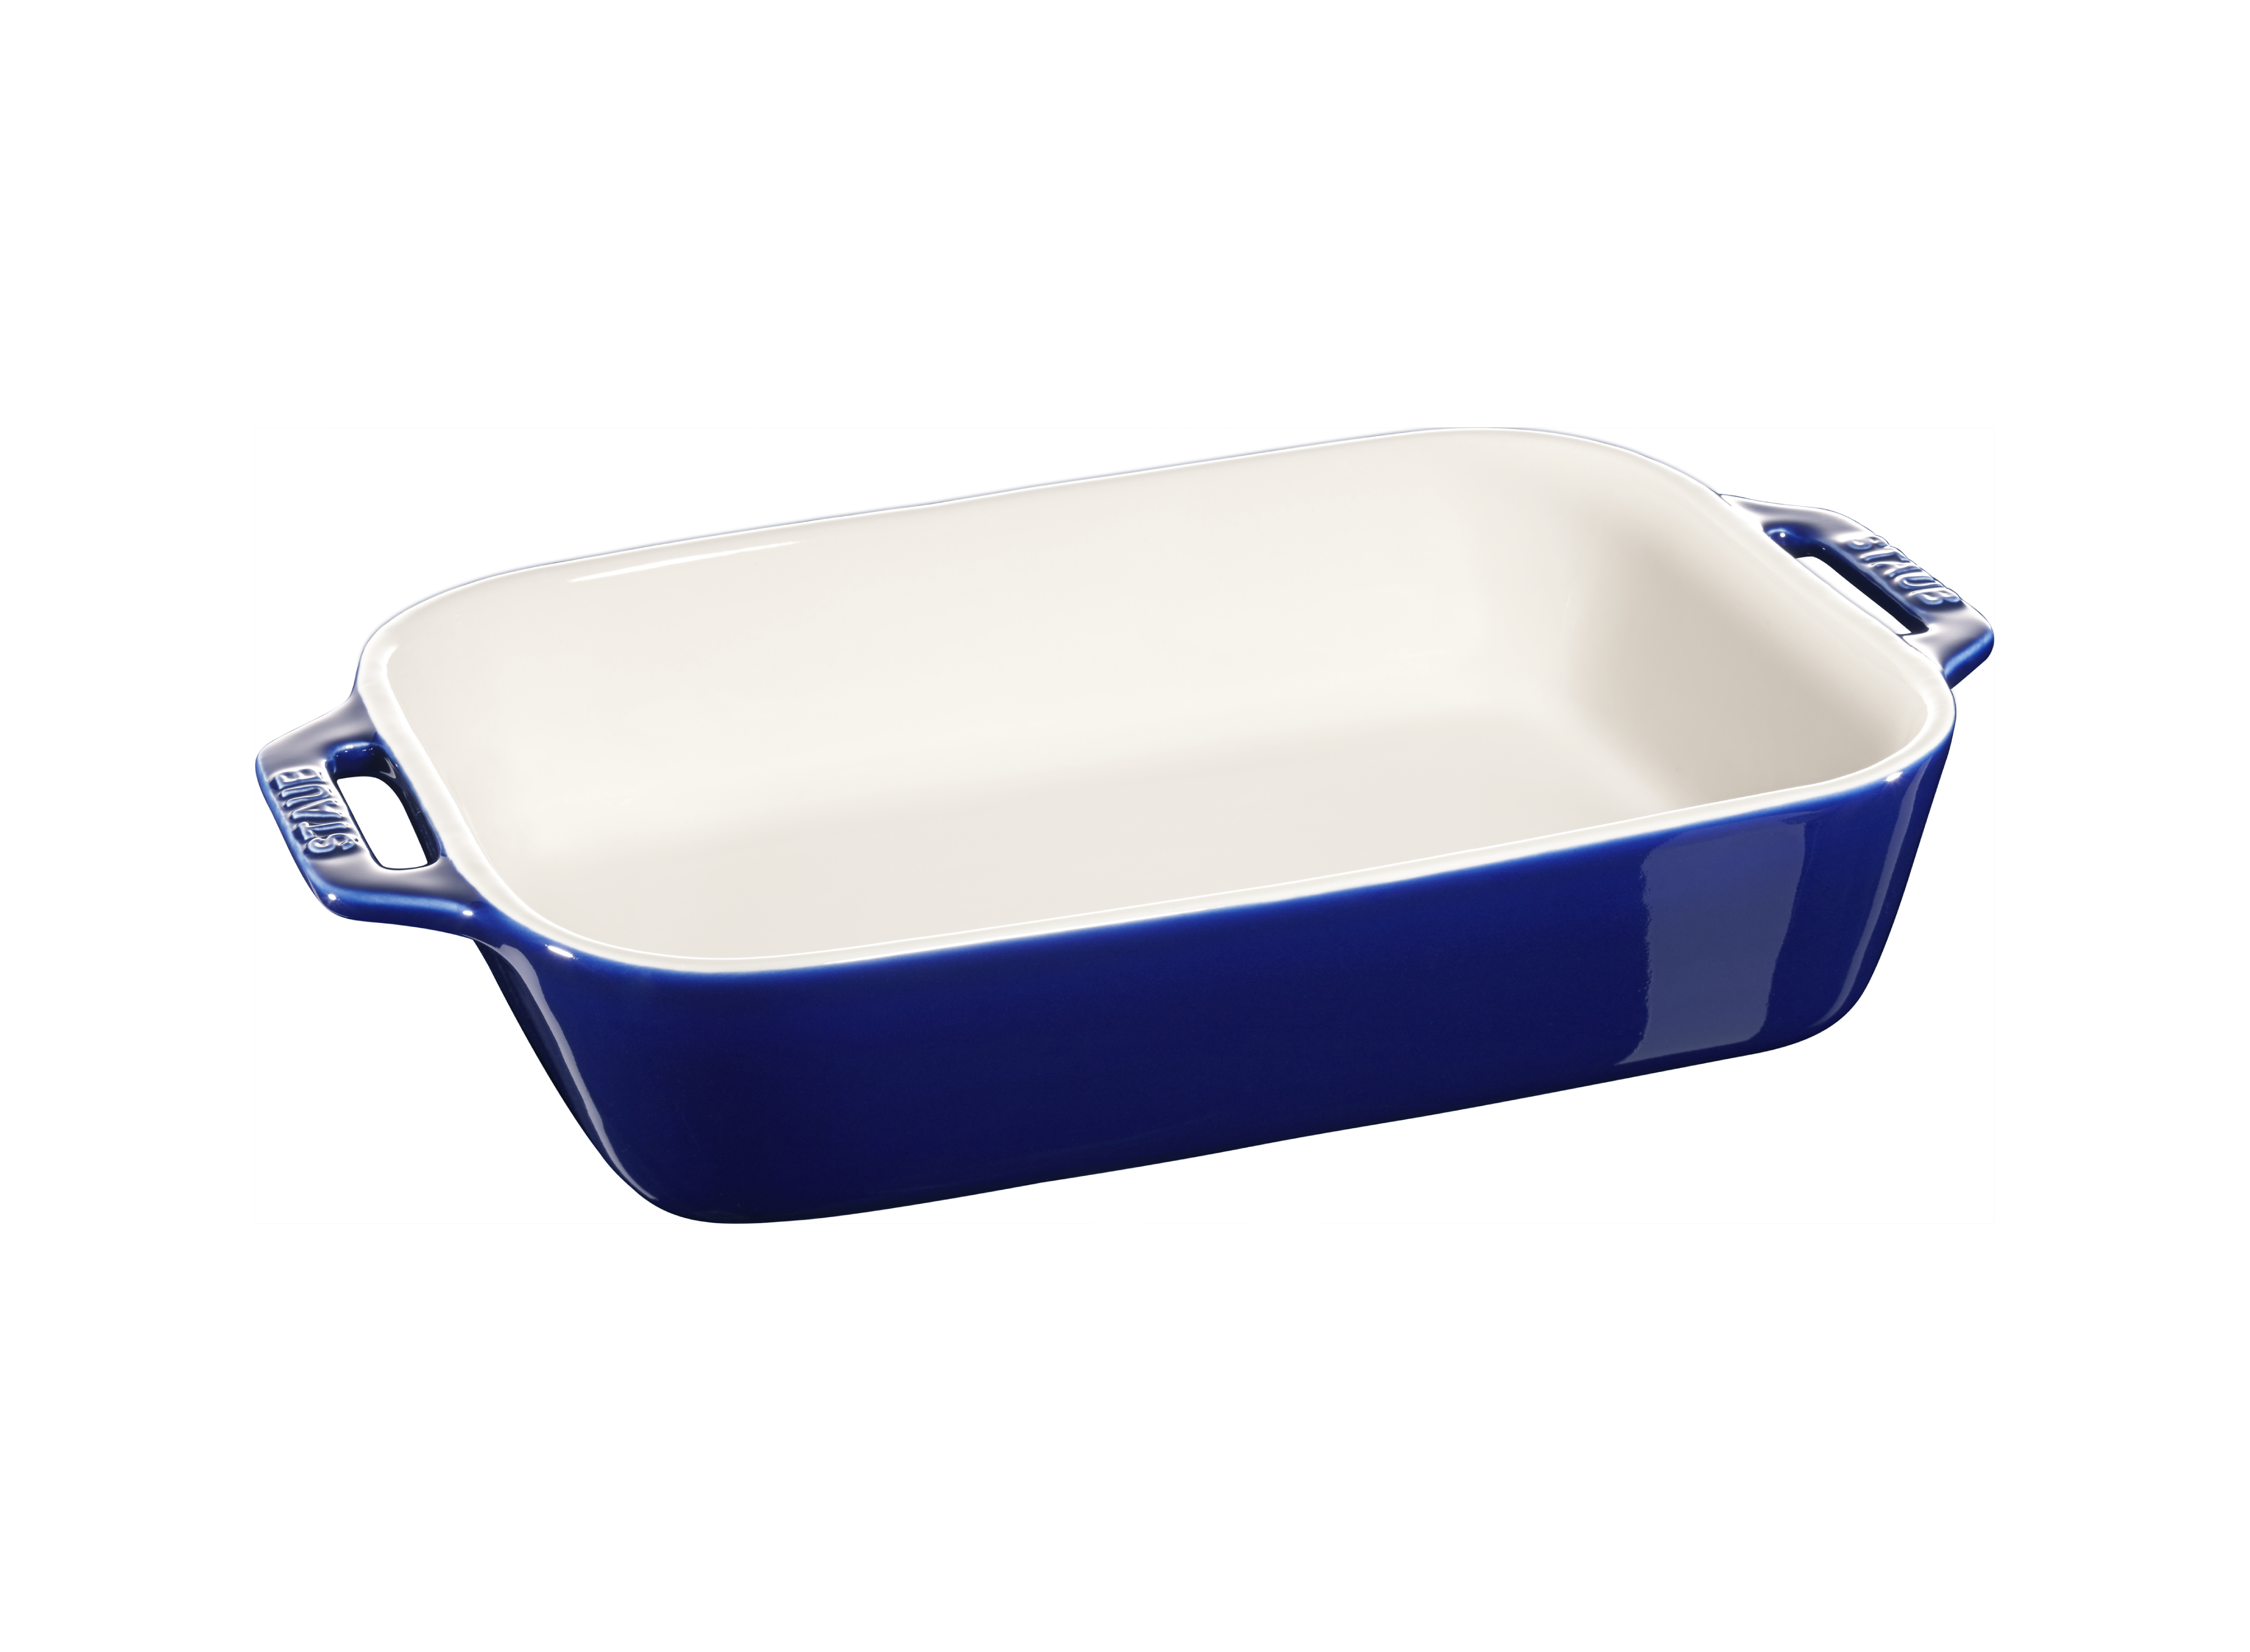 Staub Ceramic 13-X 9.45 inch Rectangular Baking Dish Color: Dark Blue